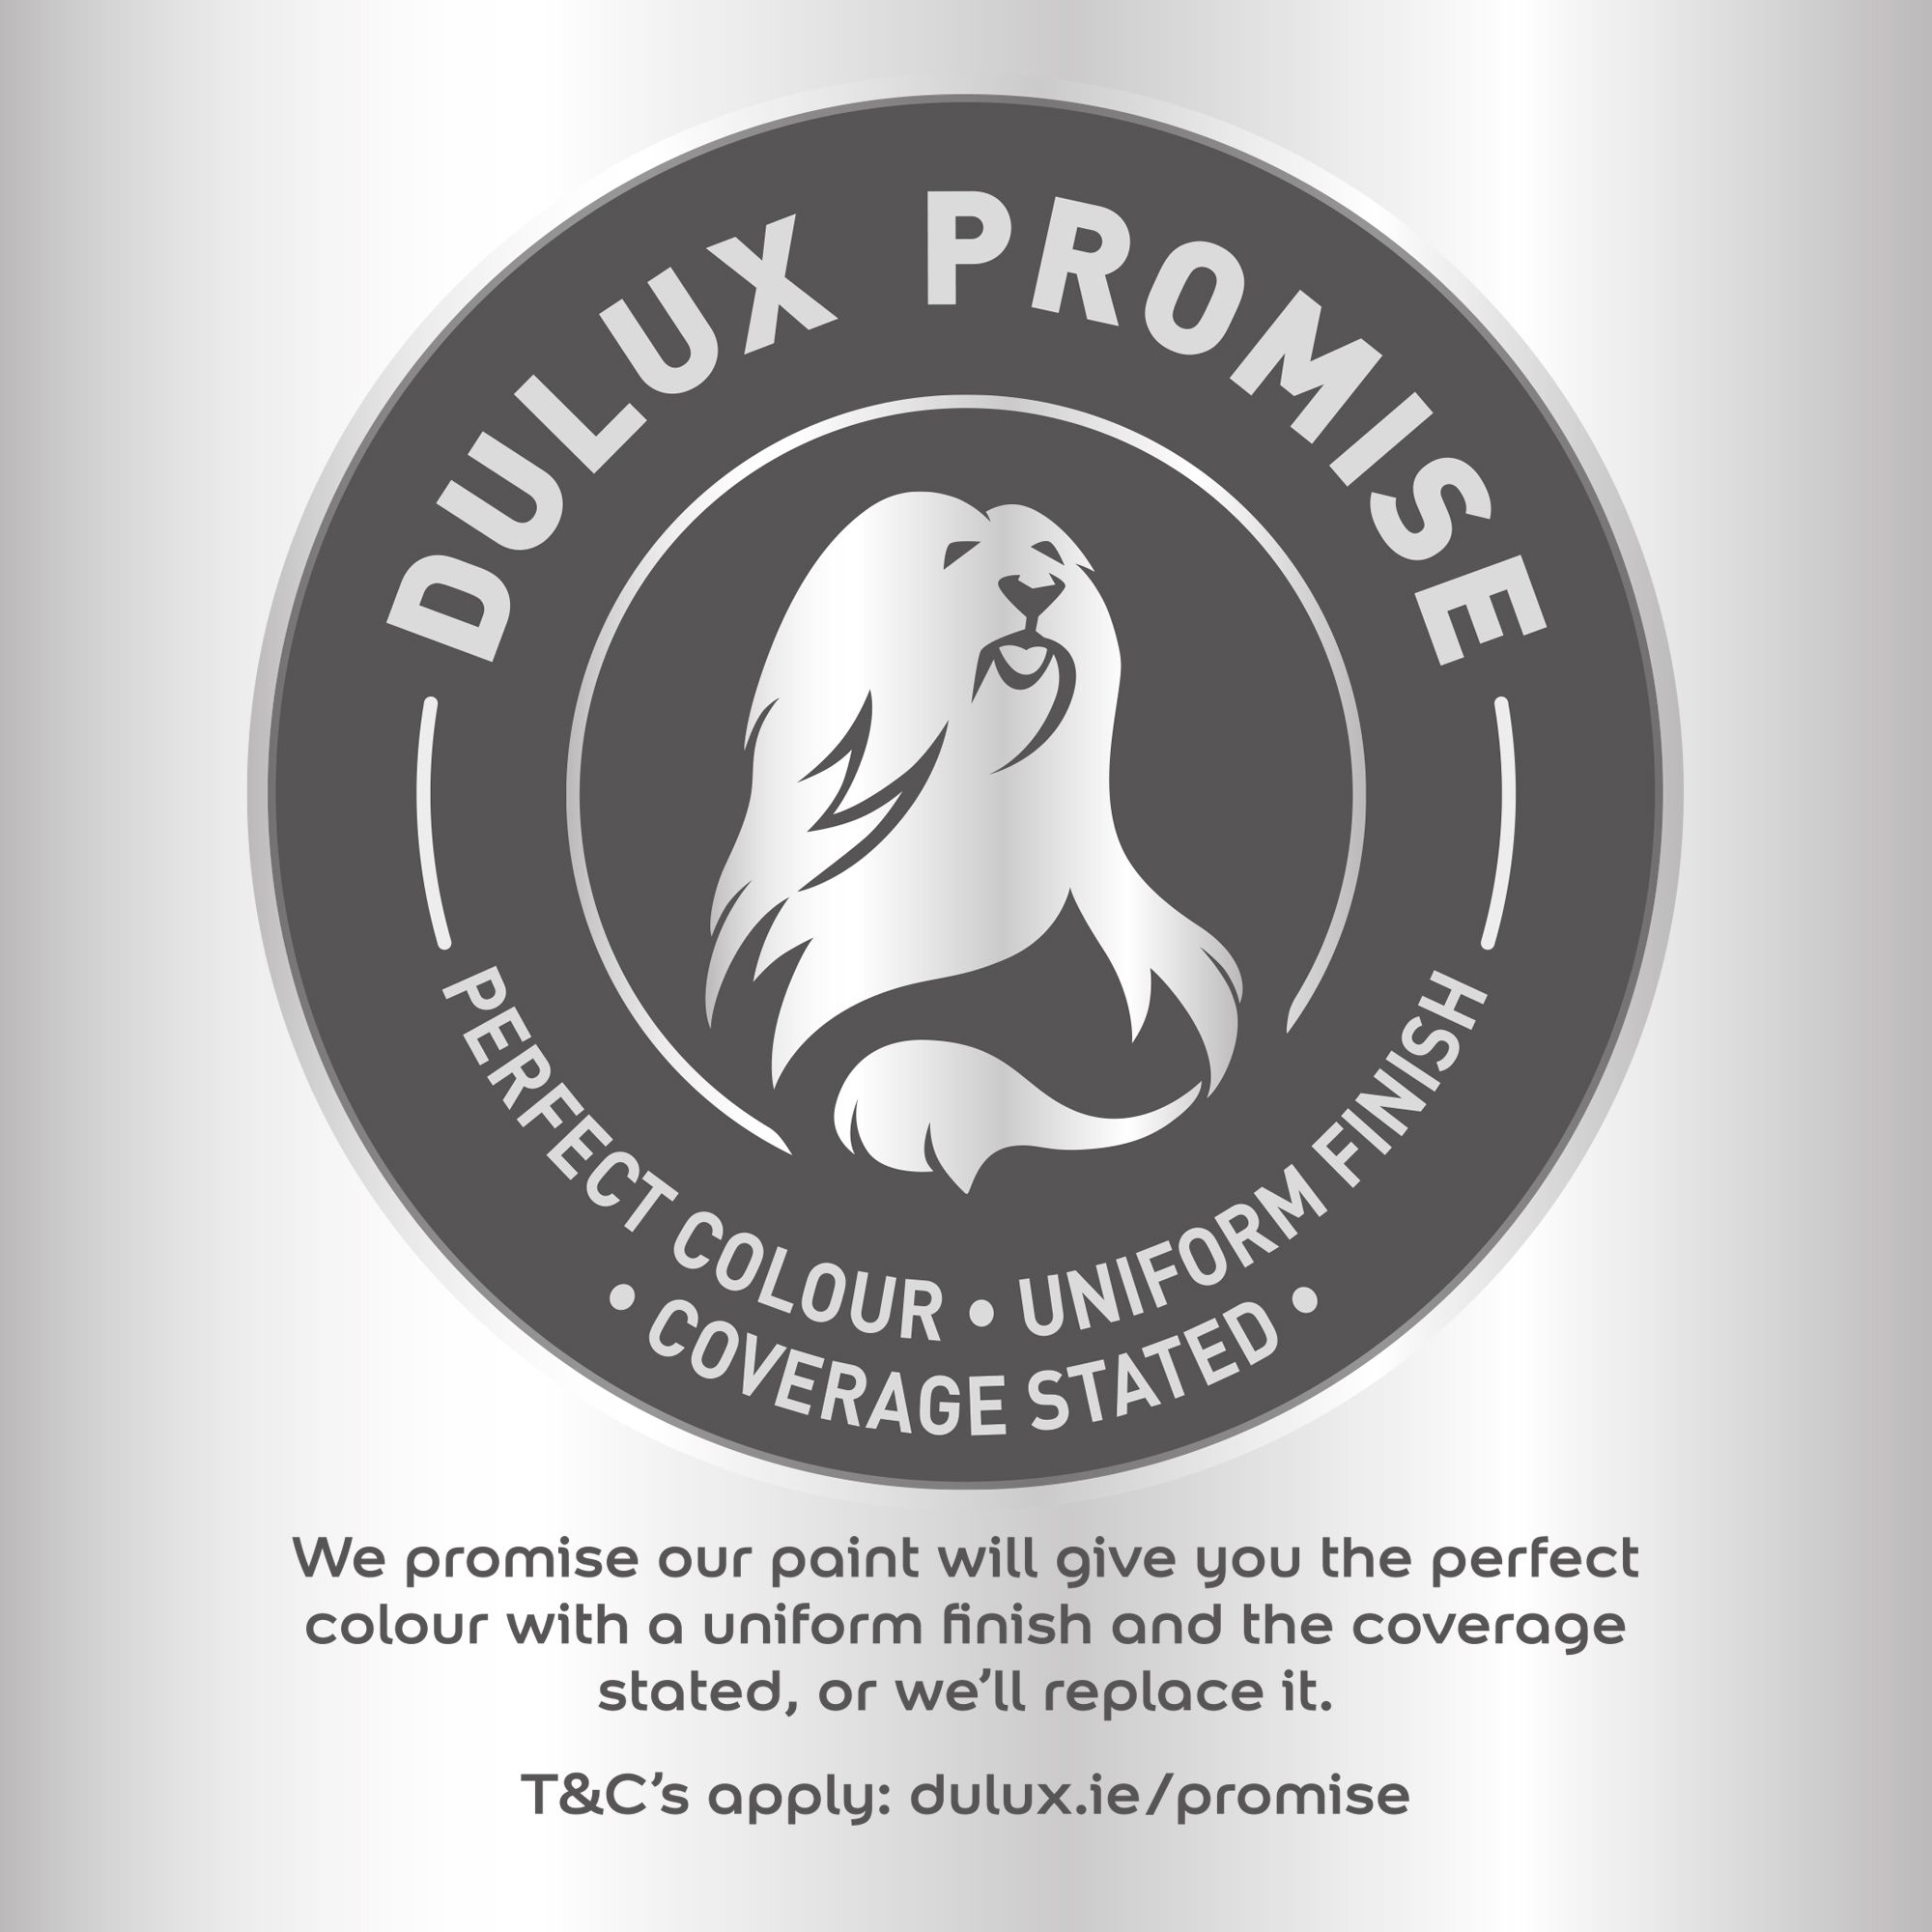 Dulux Salted caramel Vinyl matt Emulsion paint, 5L